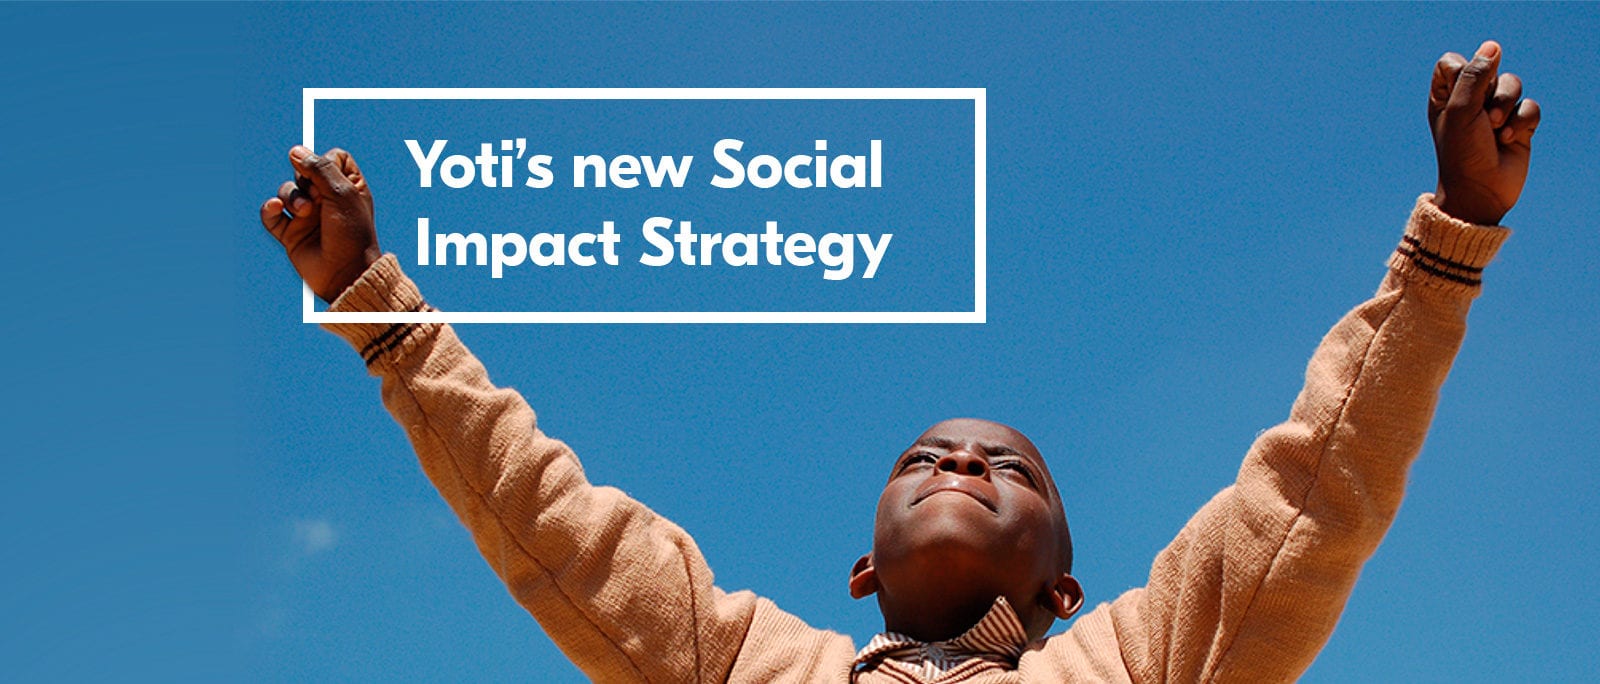 yoti's new social purpose strategy